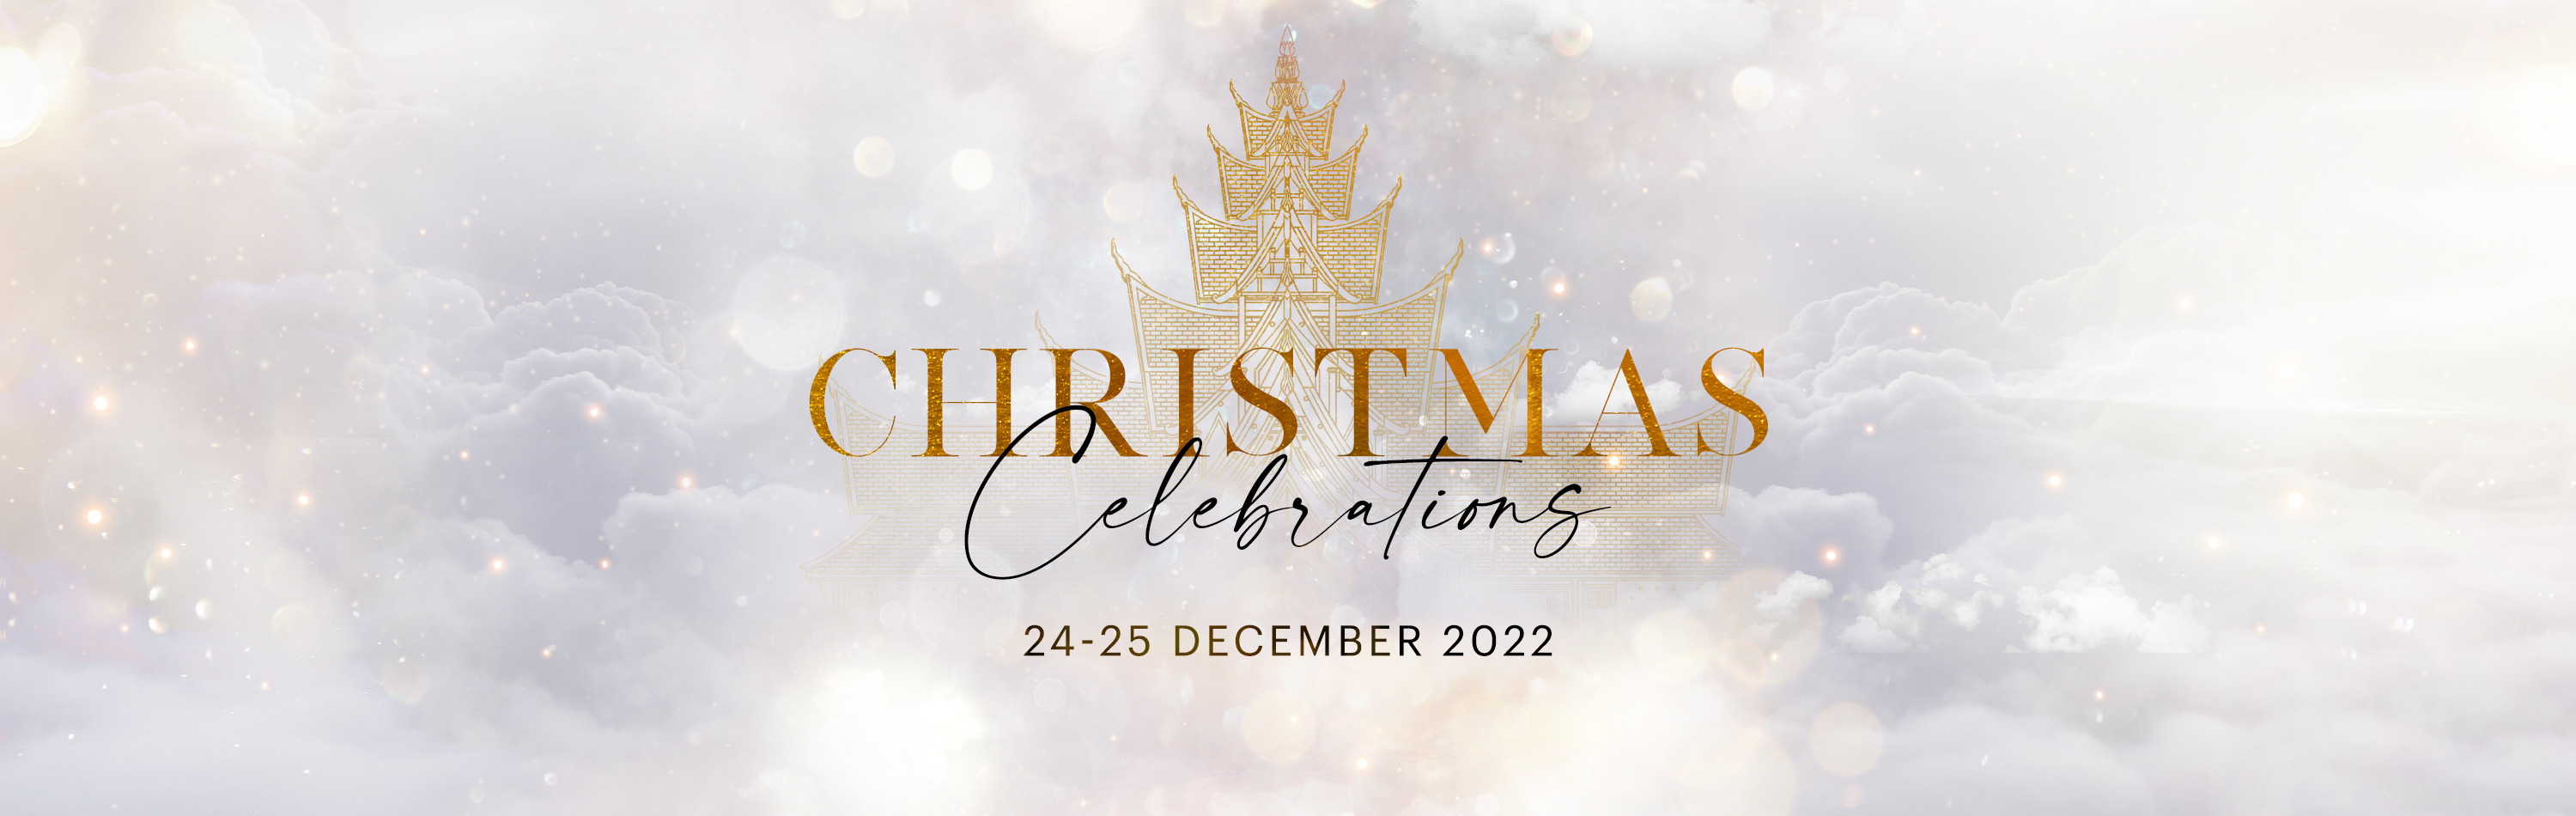 Christmas Celebrations 2022 in Phuket